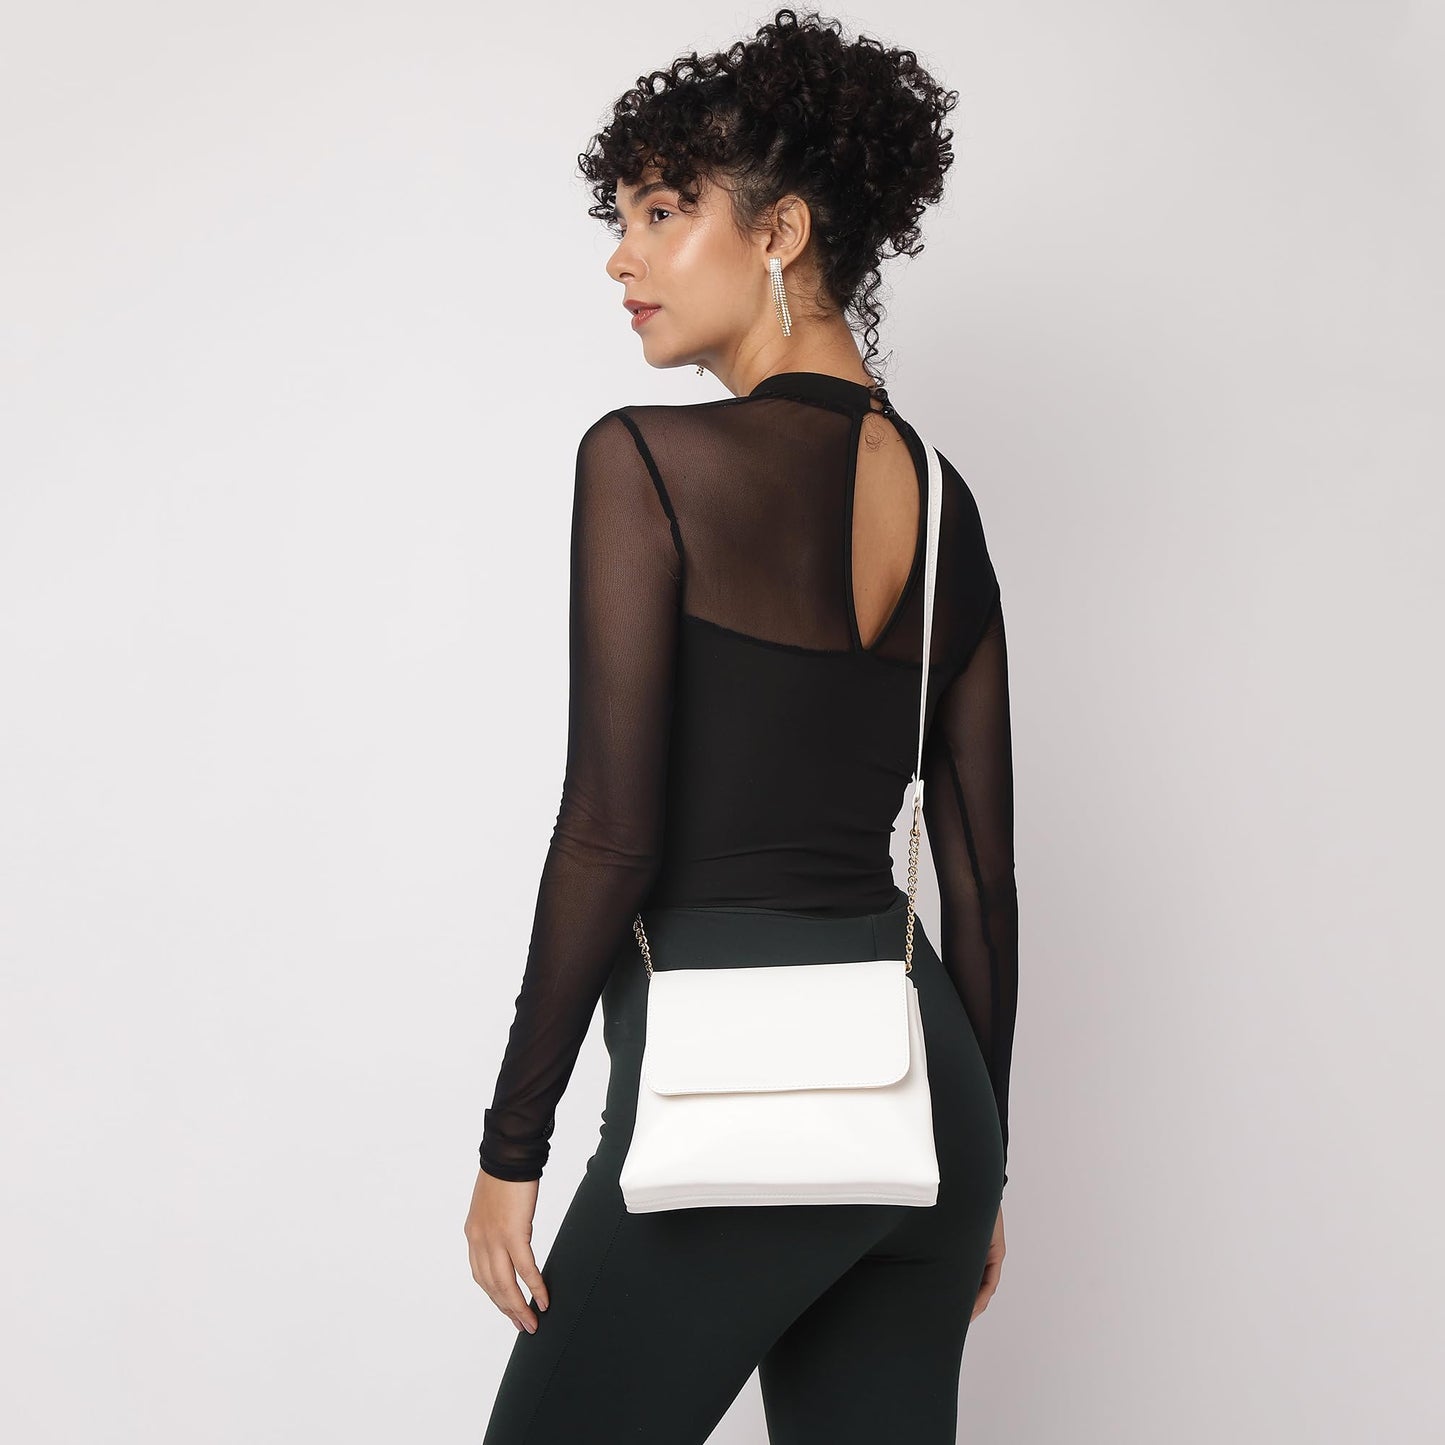 Fastrack Classic Envelope Sling Bag for Women | Stylish Crossbody Bag for Girls, Ladies, Women | Structured Handbag Made of Faux Leather (White)